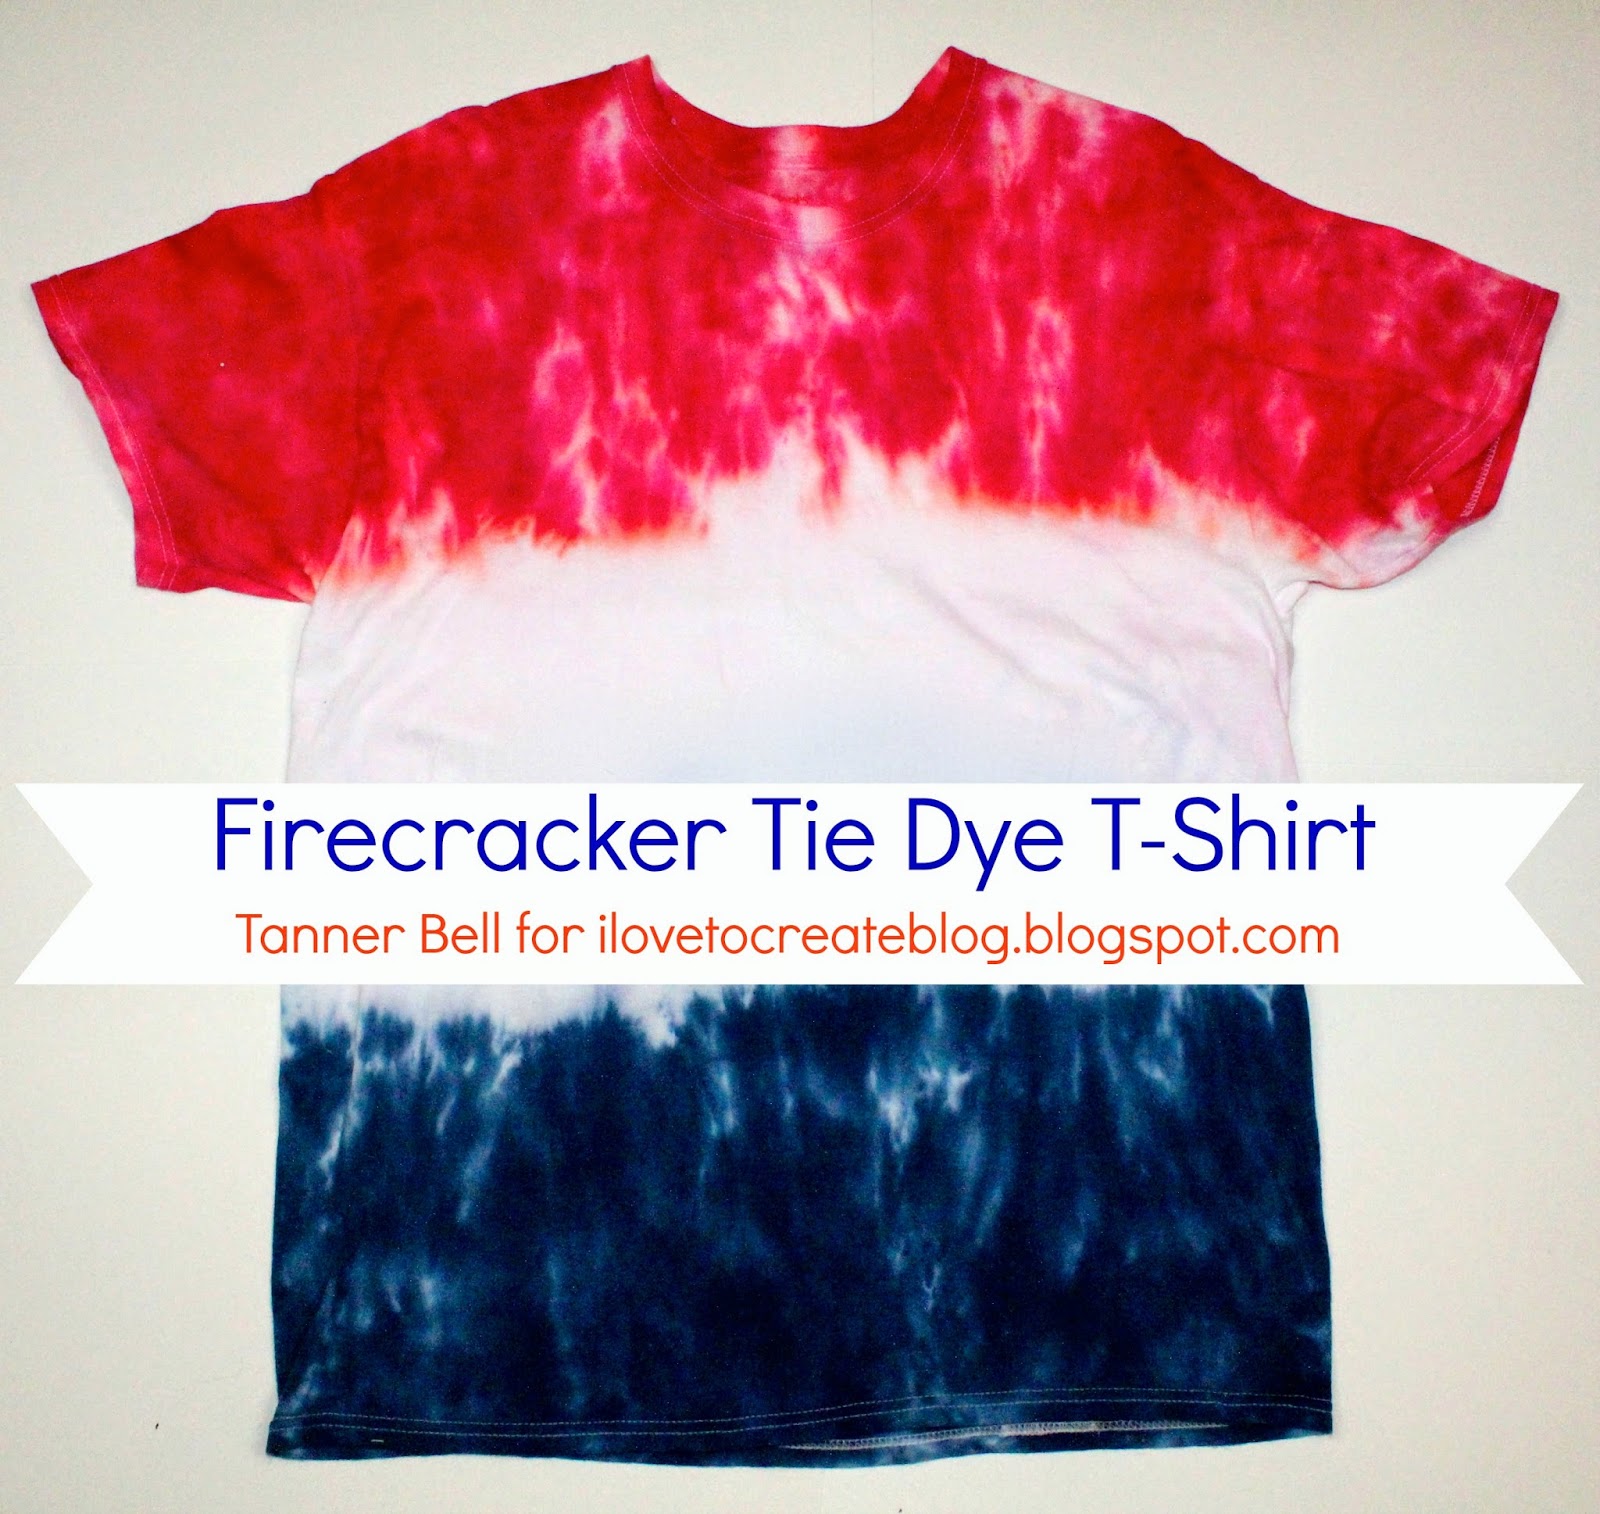 Firecracker_Tie_Dye_T-Shirt